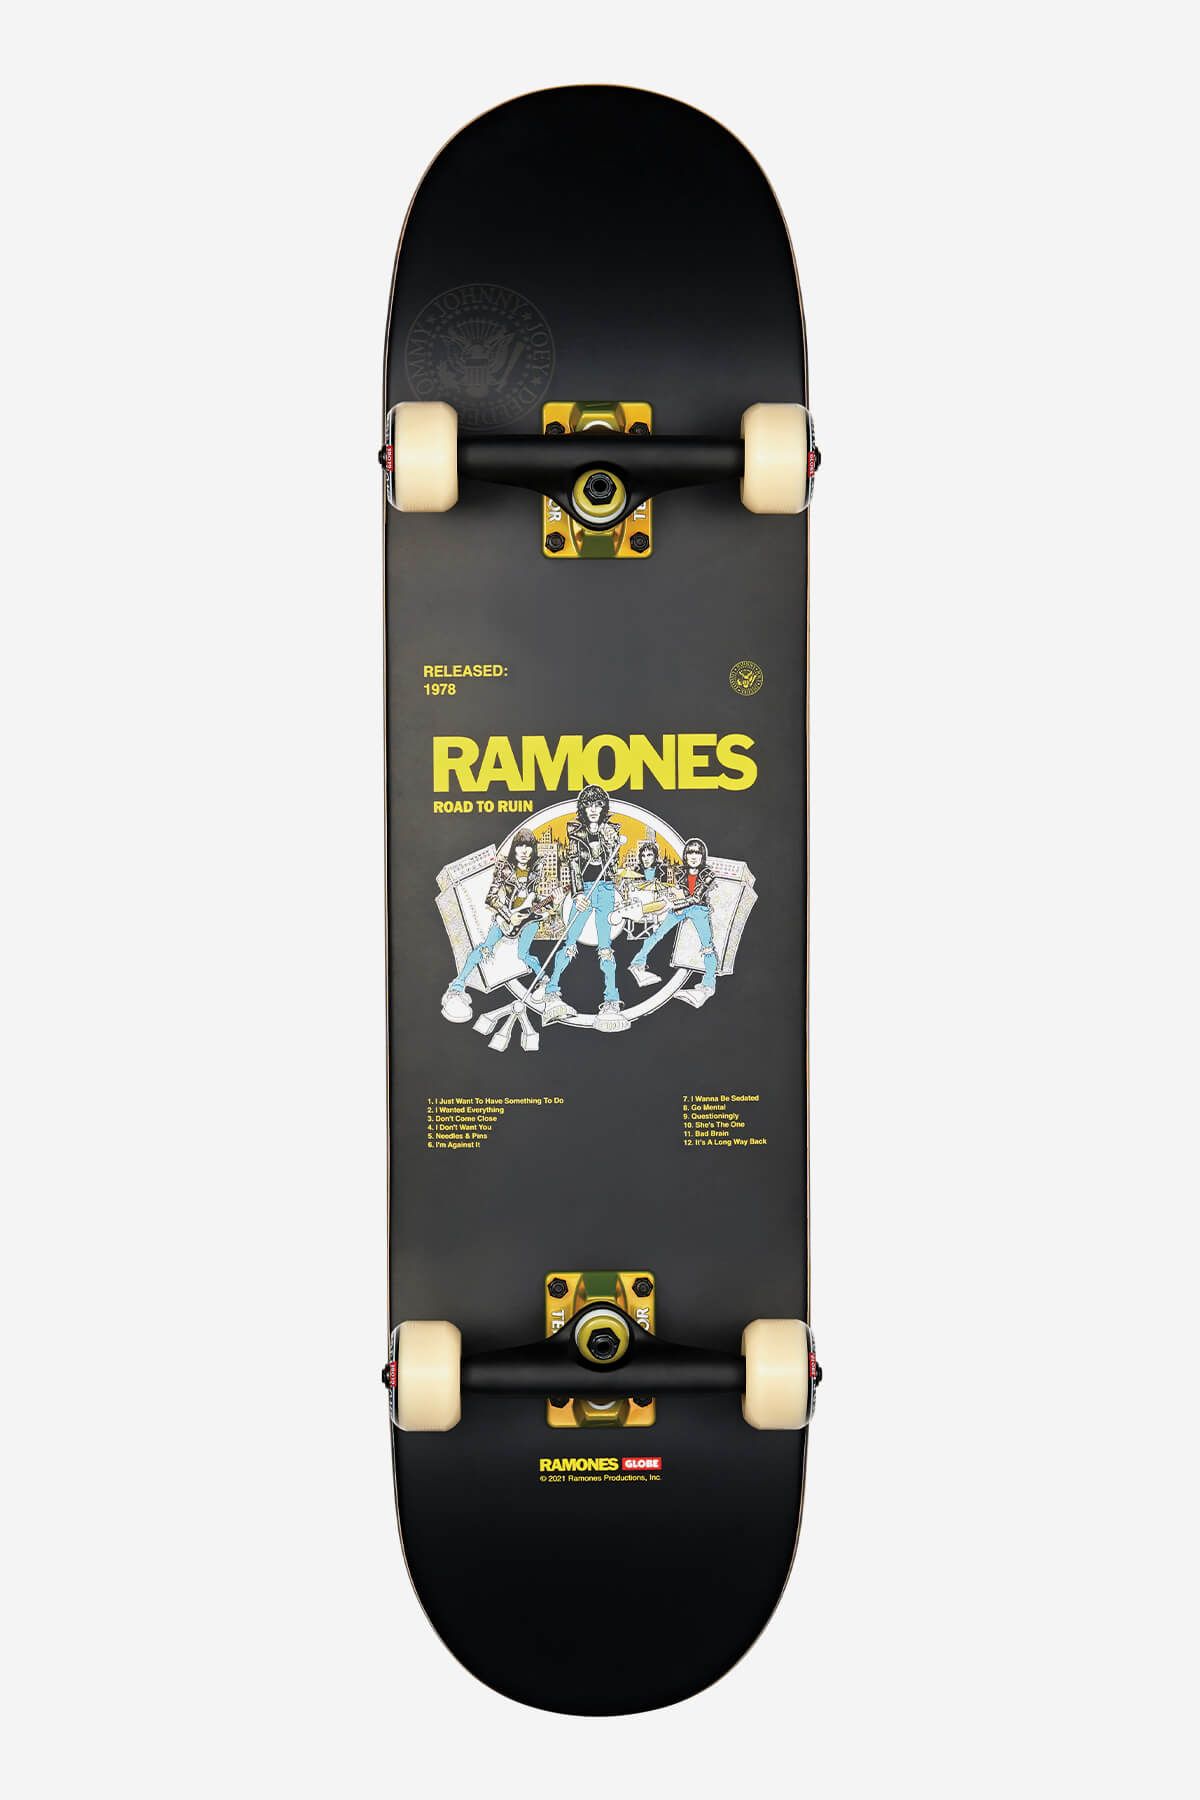 Globe Skateboard completen G2 Ramones - 8.25" Complete Skateboard in ROAD TO RUN